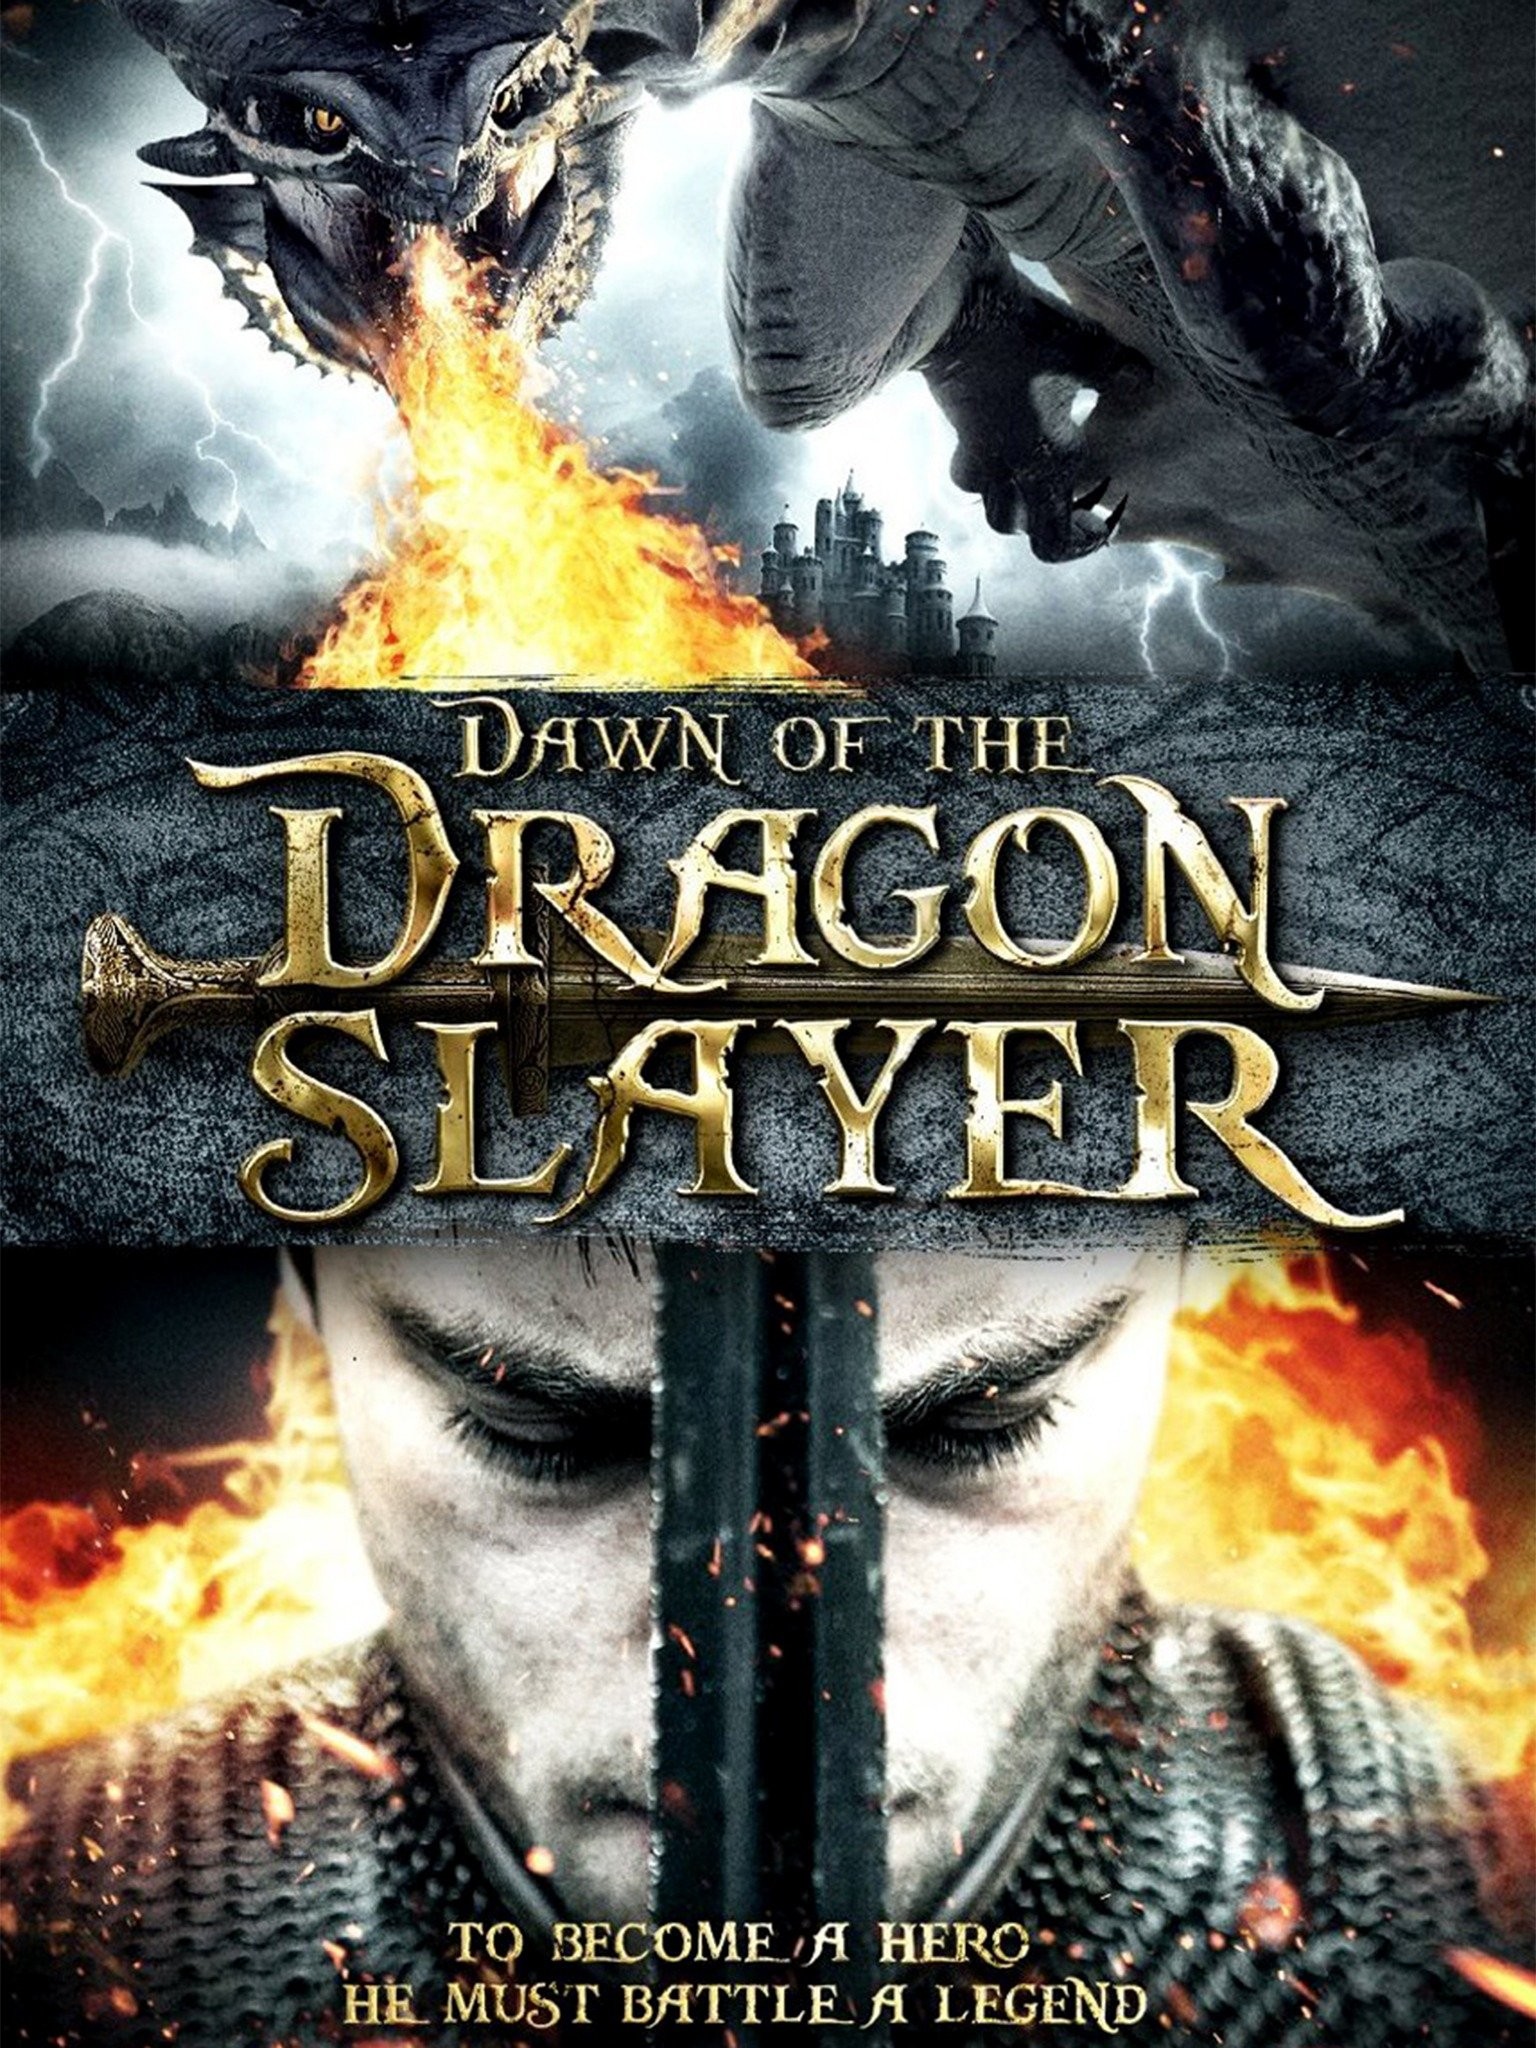 Dragonslayer (1981 film) - Wikipedia